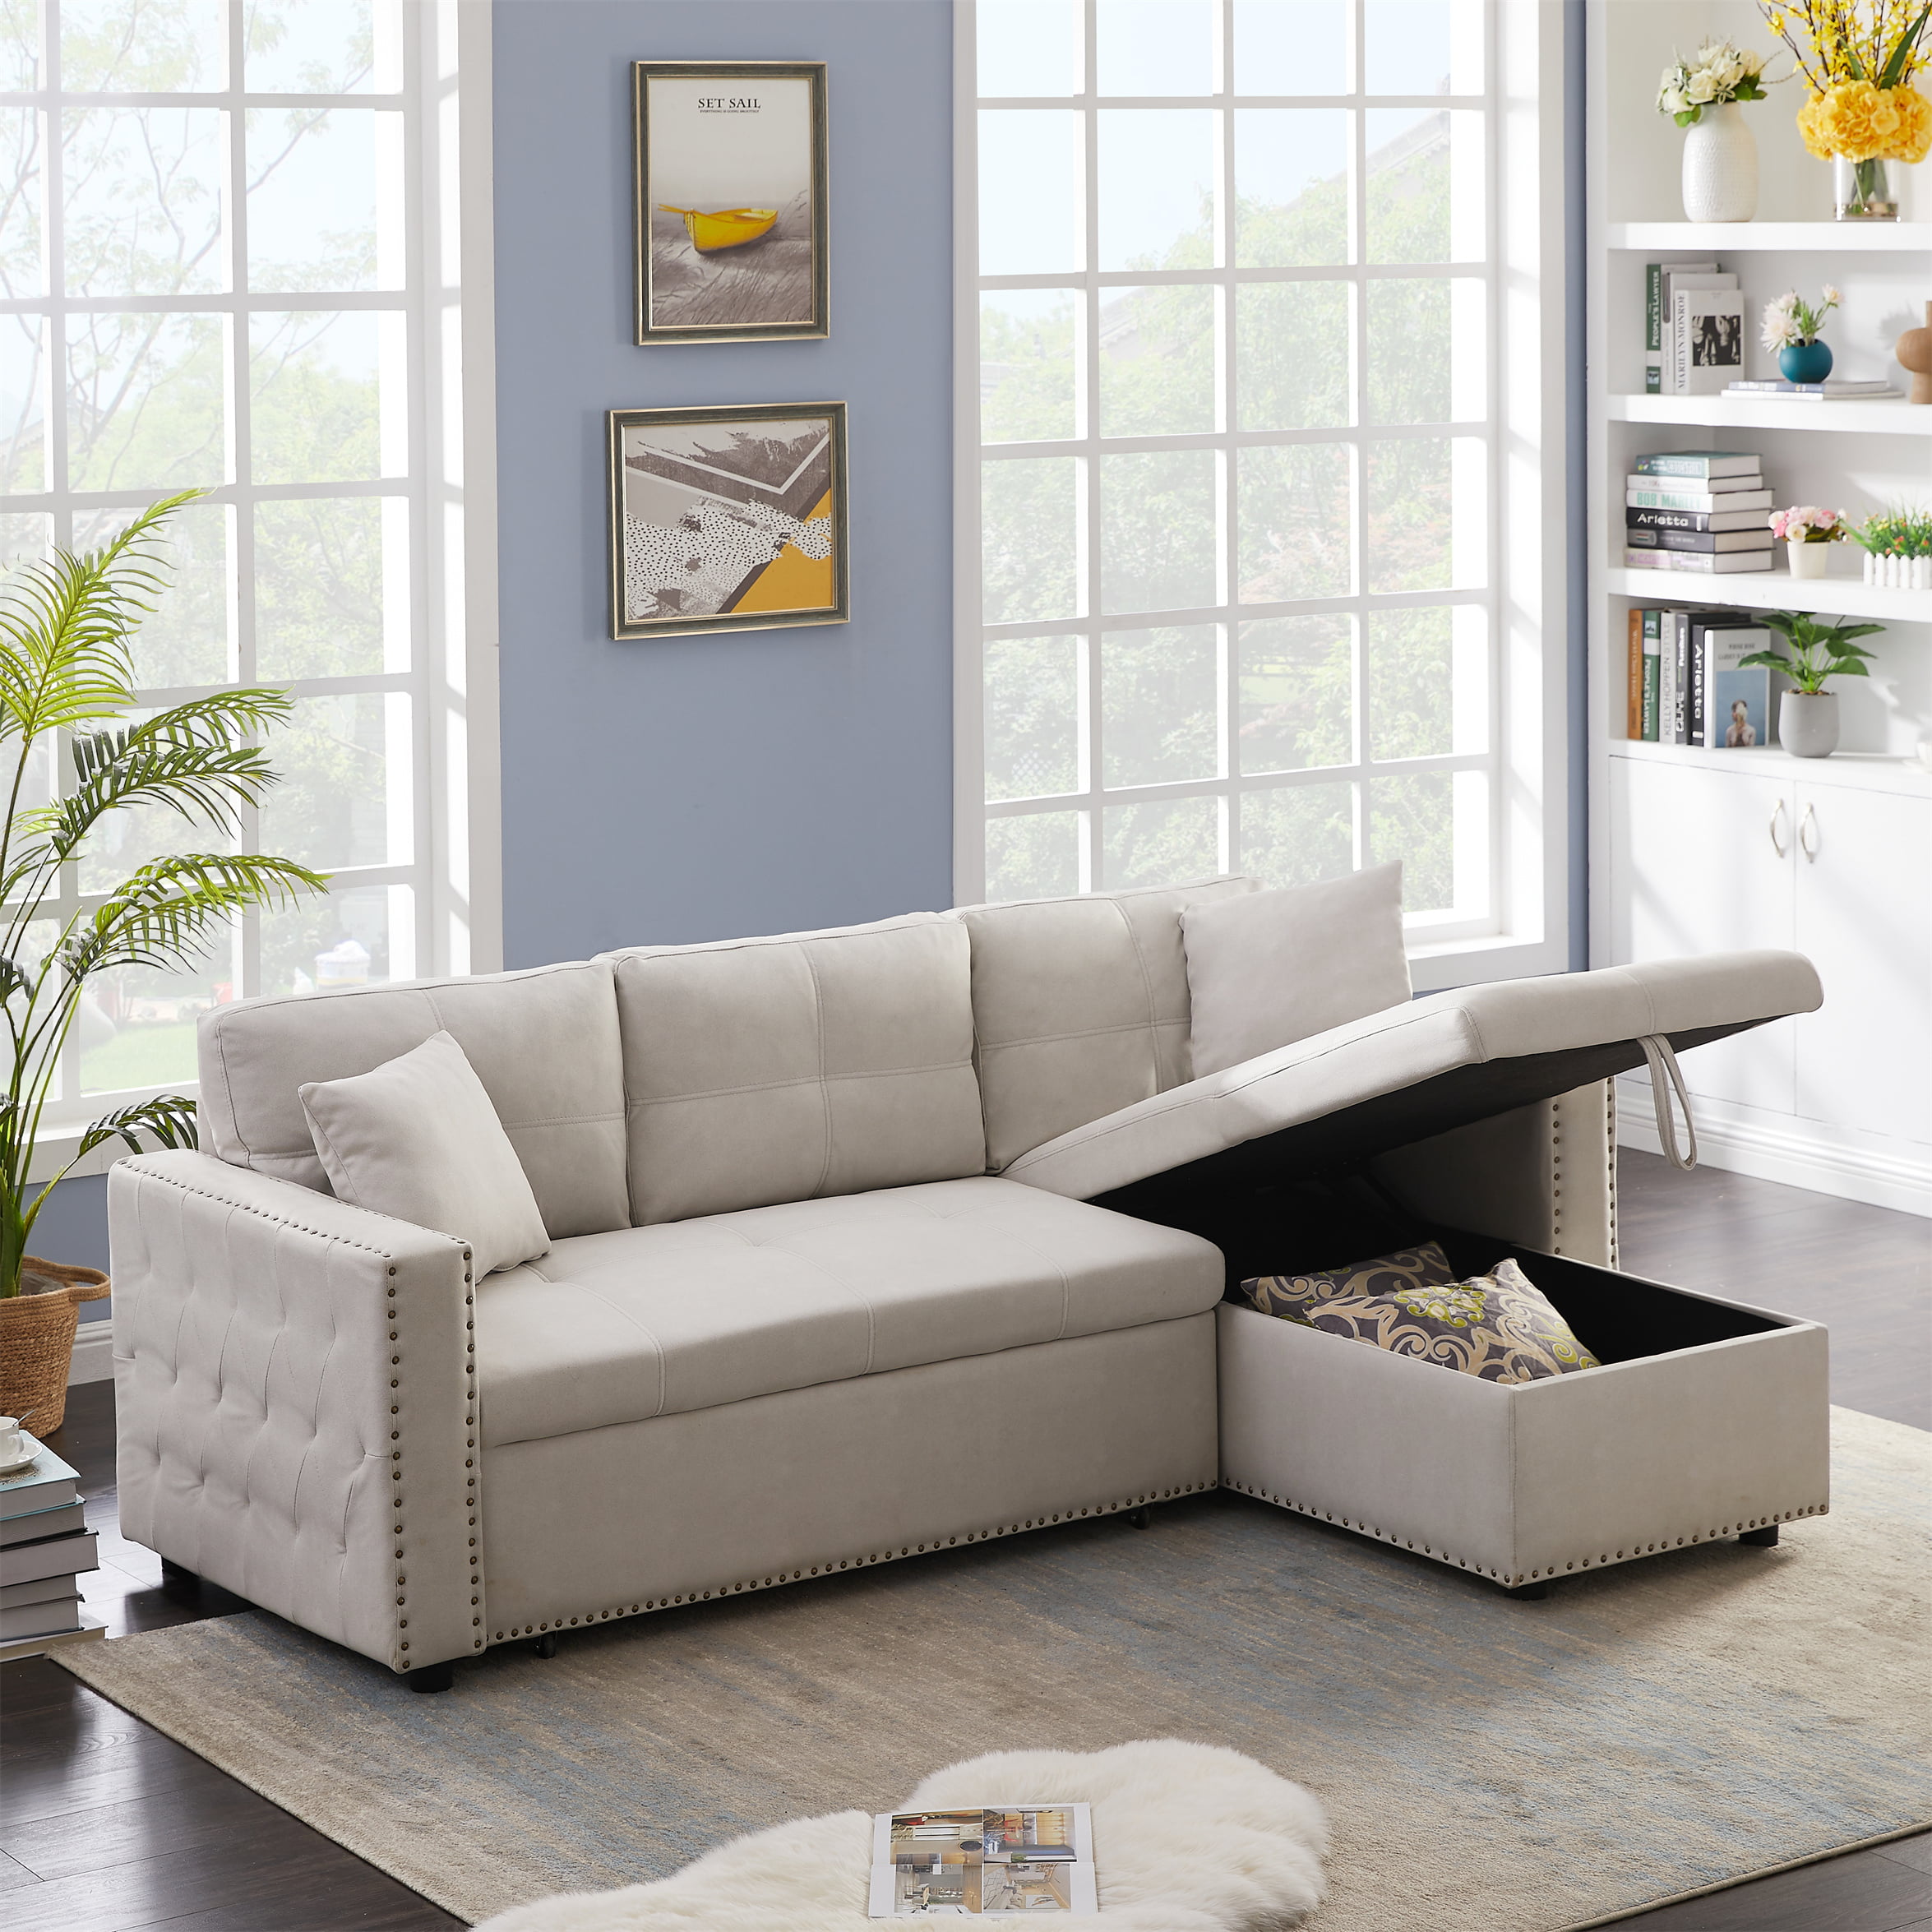 Aukfa Modern Sectional Sleeper Sofa